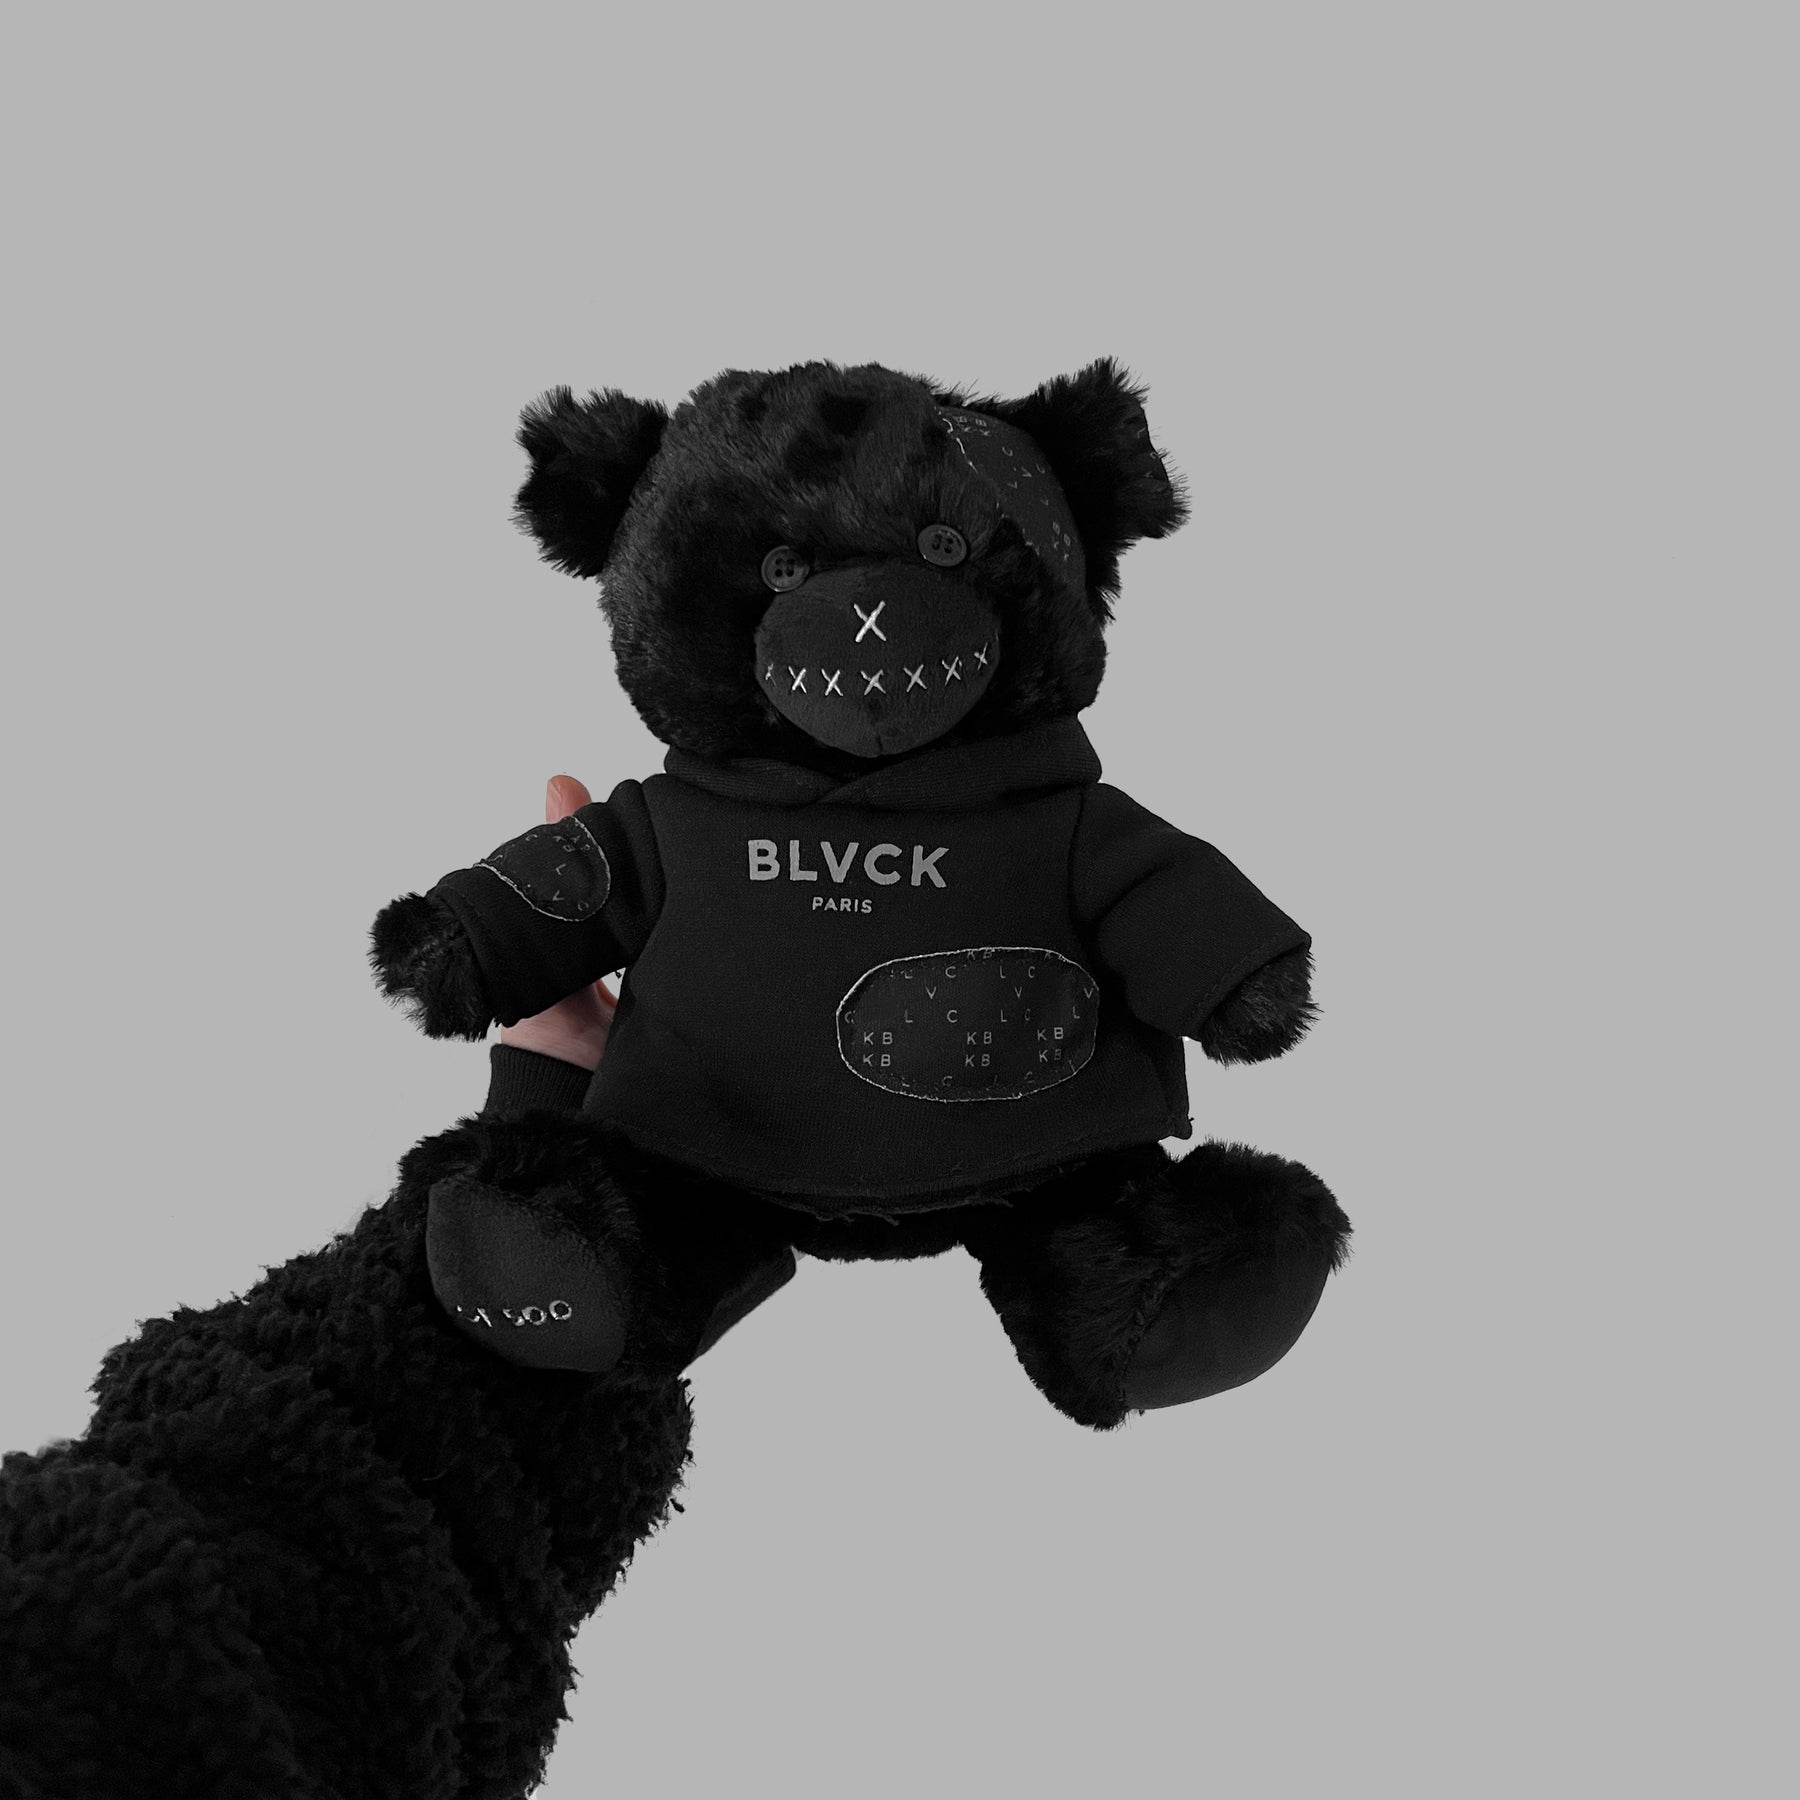 EVIL TEDDY BEAR – Blvck Paris - Japan